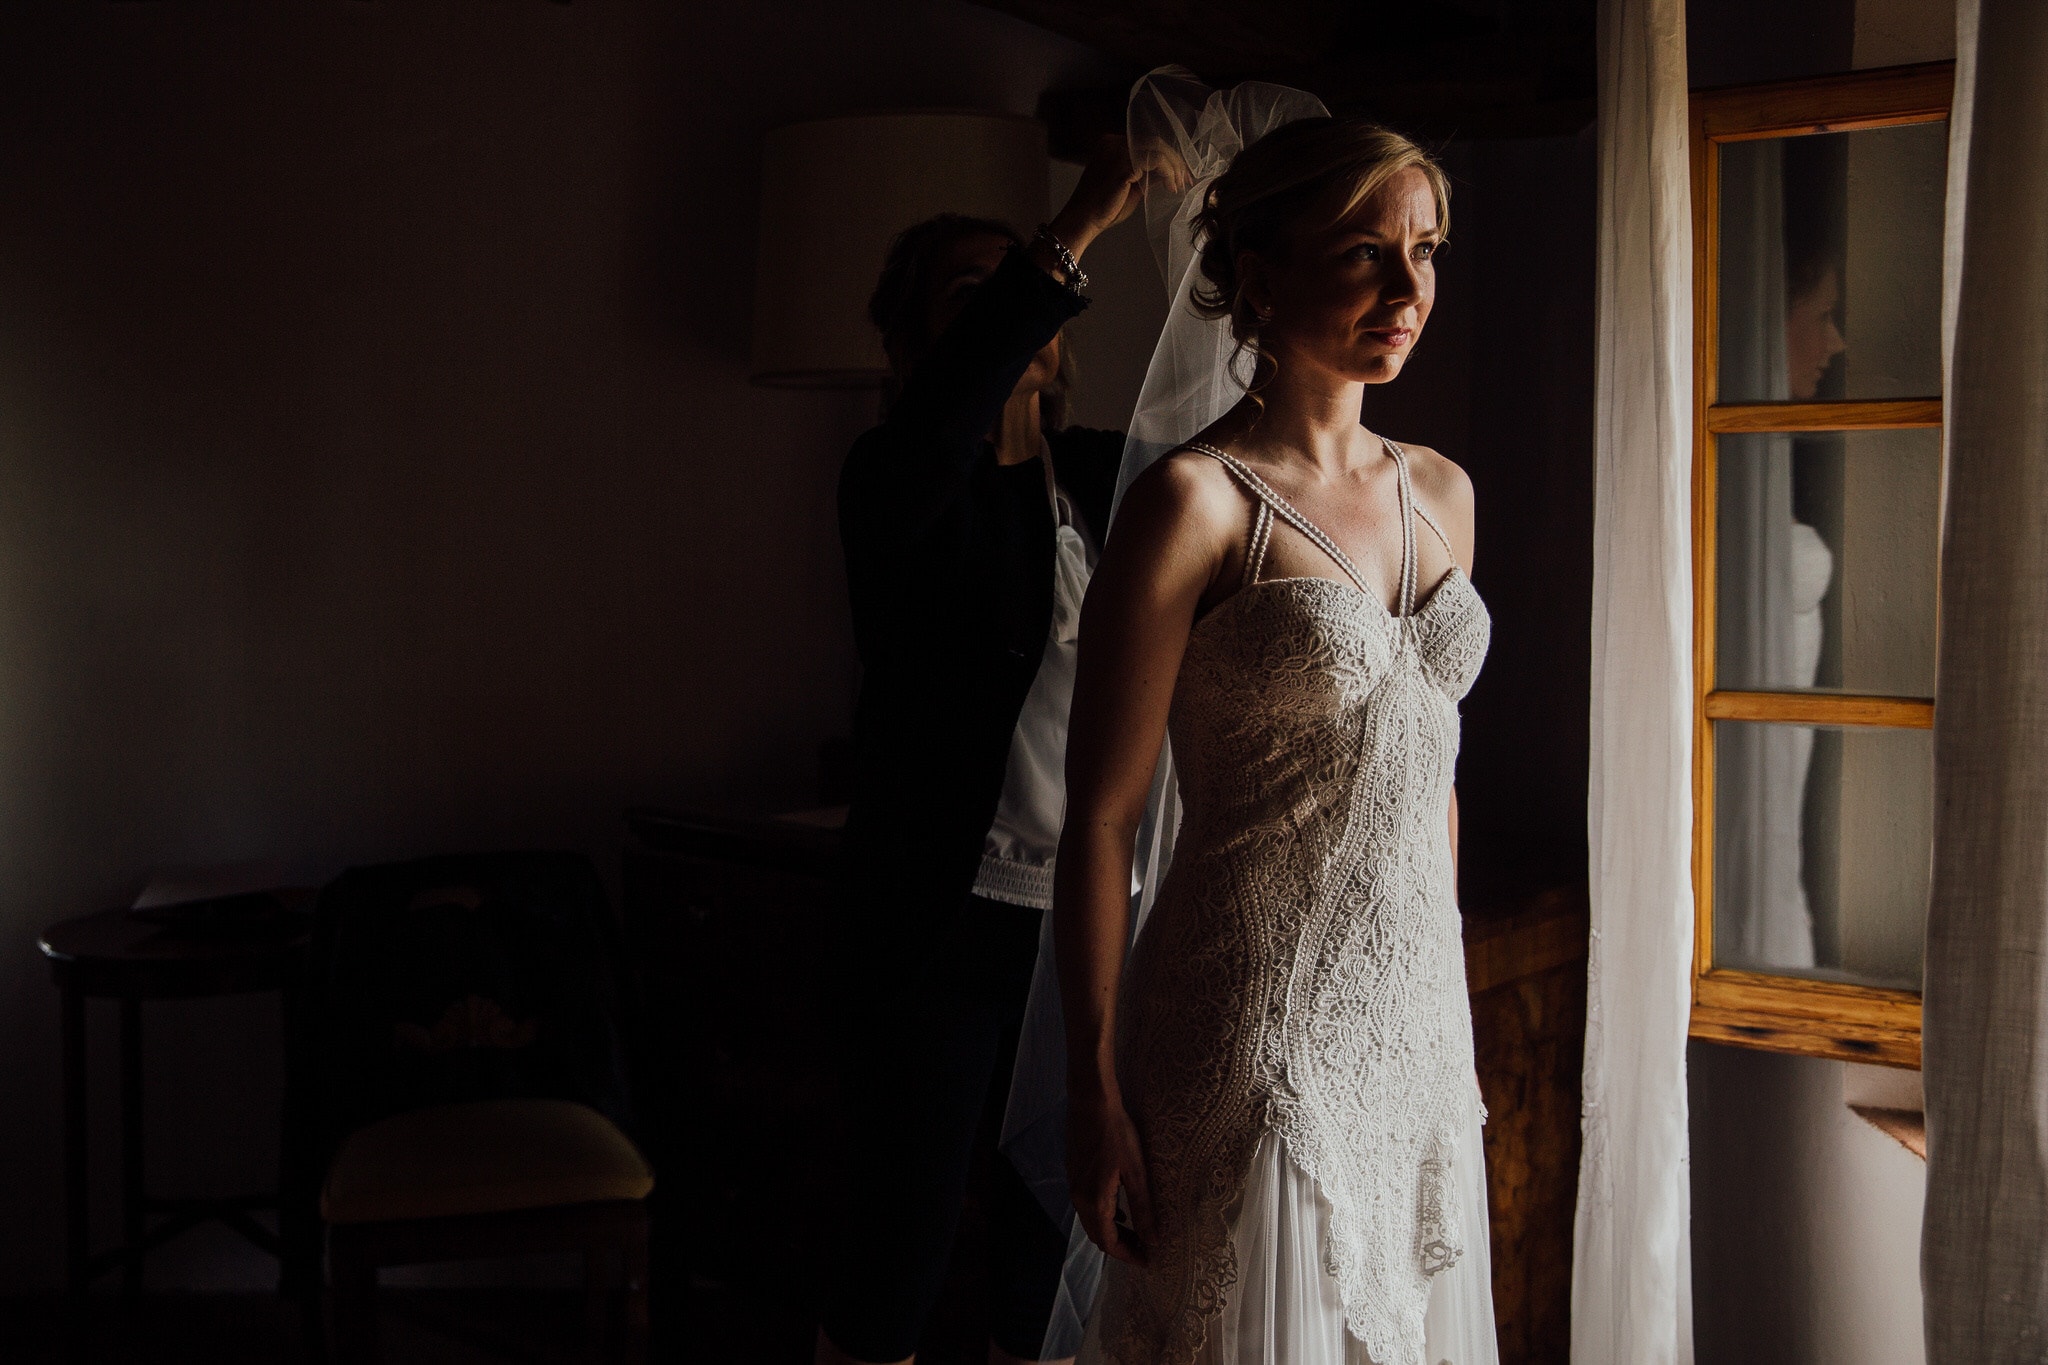 bride frame in window light putting veil on